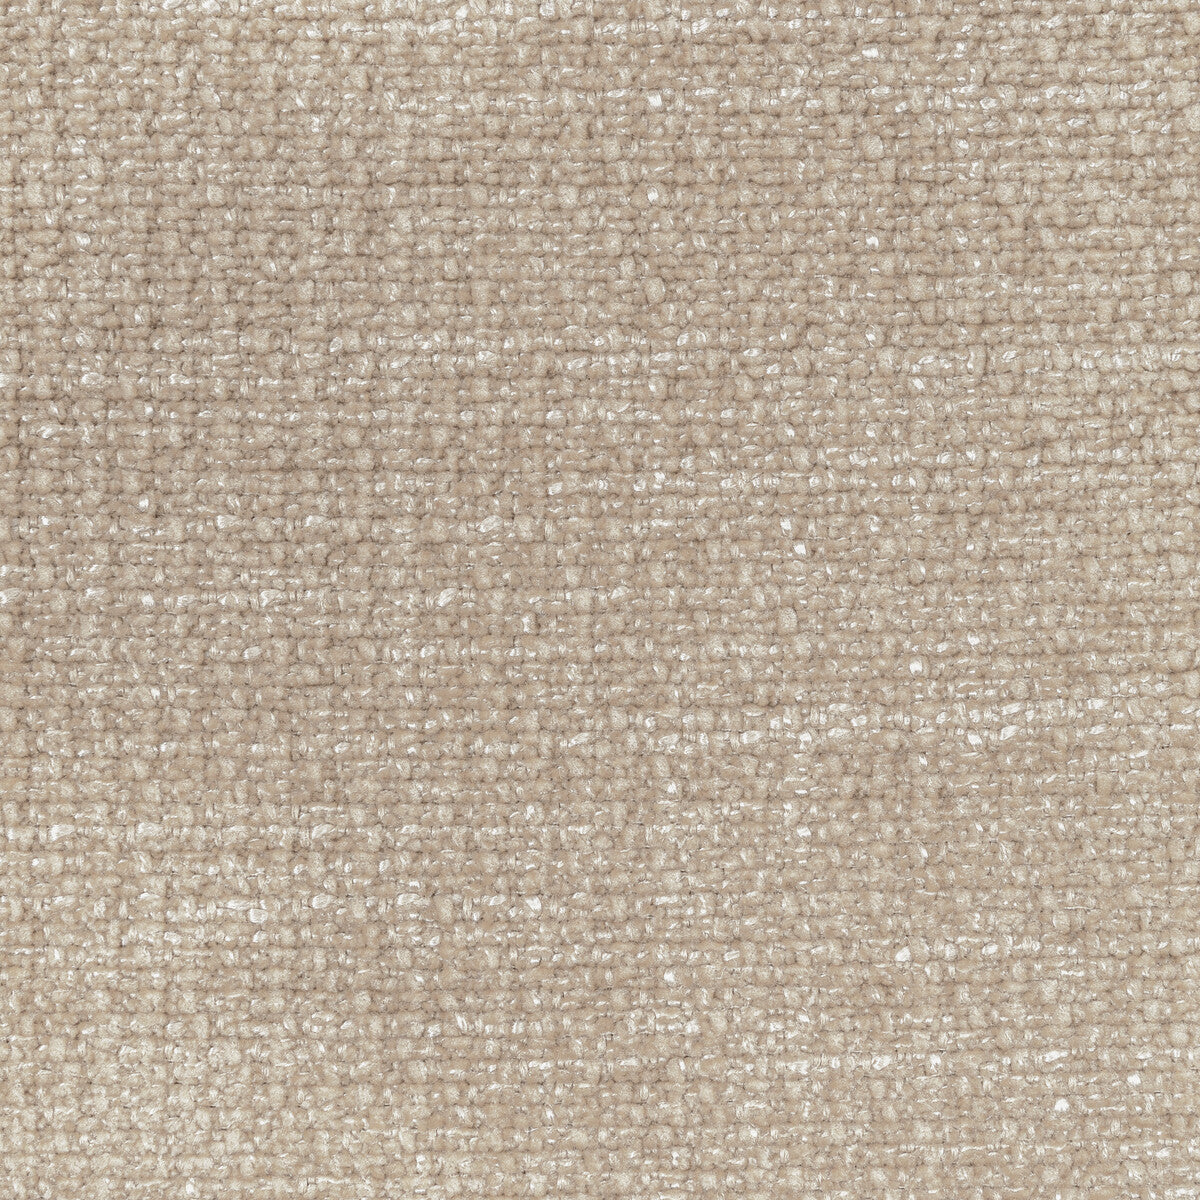 Kravet Smart fabric in 36578-1611 color - pattern 36578.1611.0 - by Kravet Smart in the Performance Kravetarmor collection